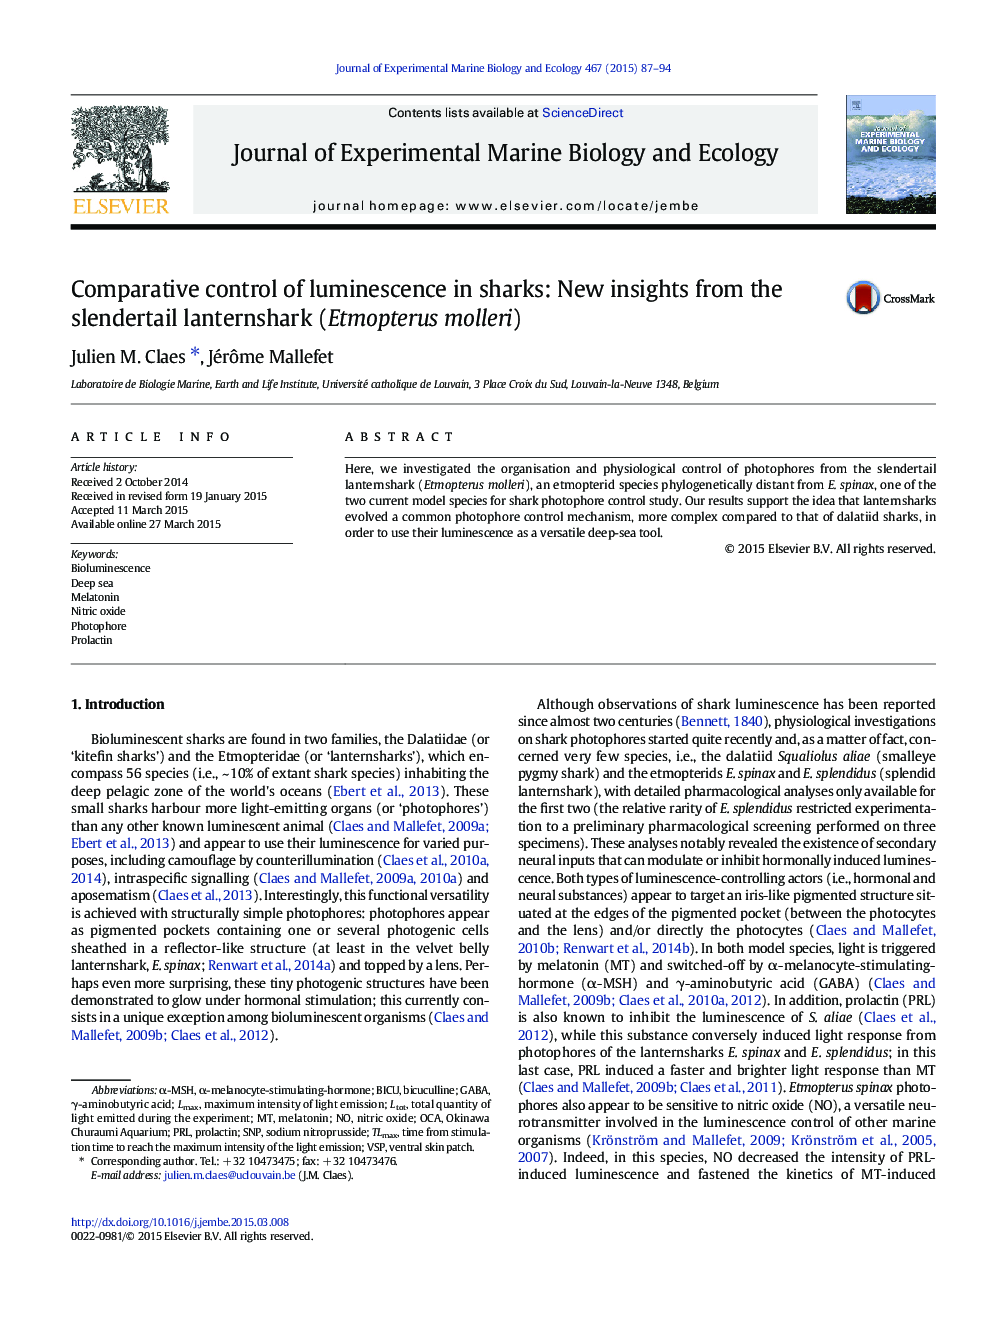 Comparative control of luminescence in sharks: New insights from the slendertail lanternshark (Etmopterus molleri)